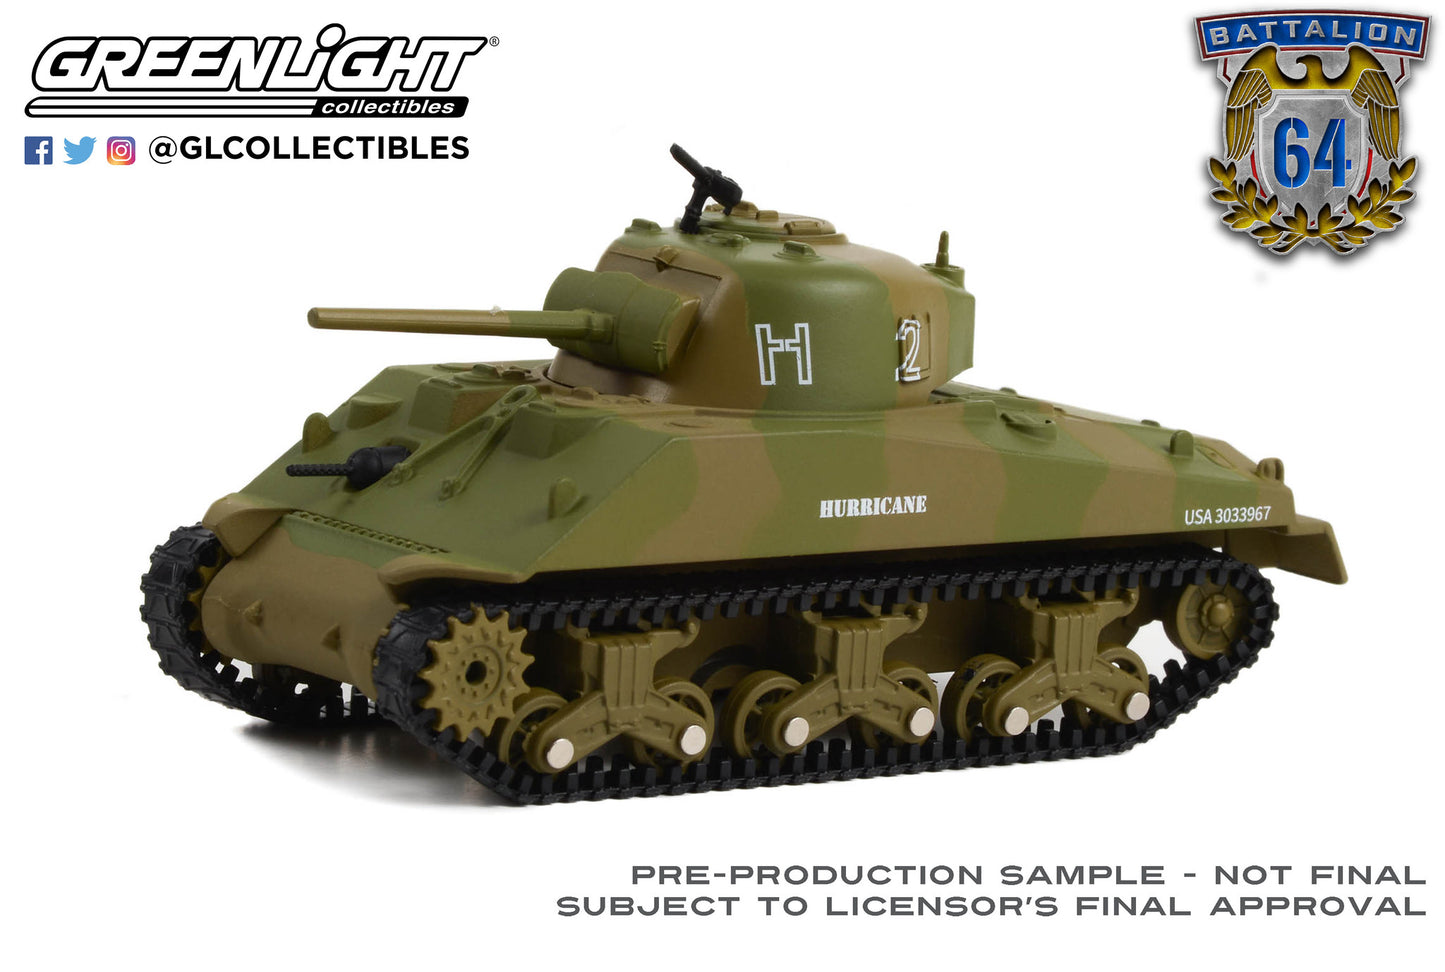 GreenLight 1:64 Battalion 64 Series 3 - 1944 M4 Sherman Tank “Hurricane” - U.S. Army World War II - 66th Armor Regiment, 2nd U.S. Armored Division, Normandy 61030-B